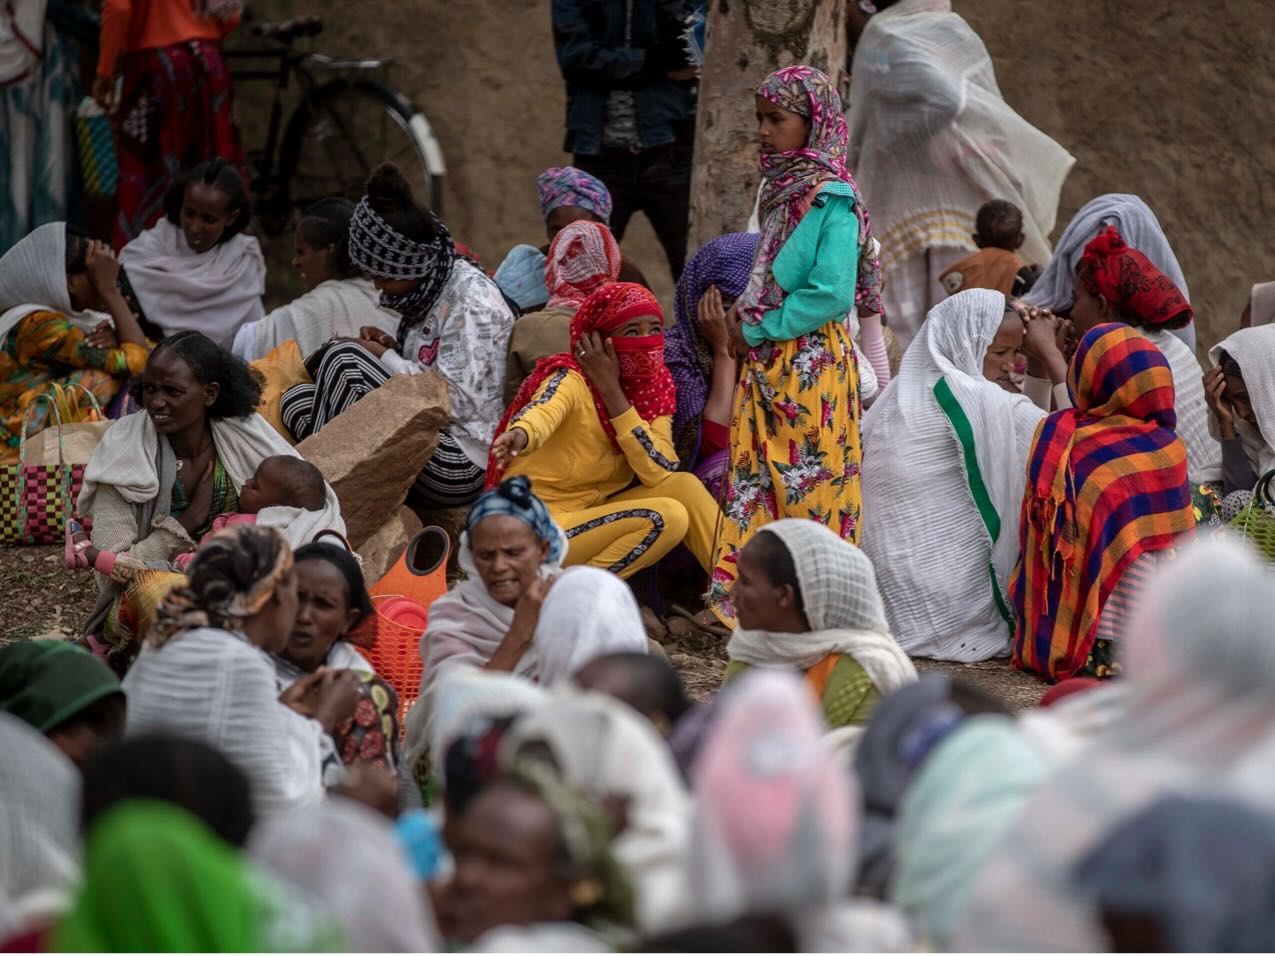 Confrontant l'abusiu setge d'Etiòpia de Kenneth Roth